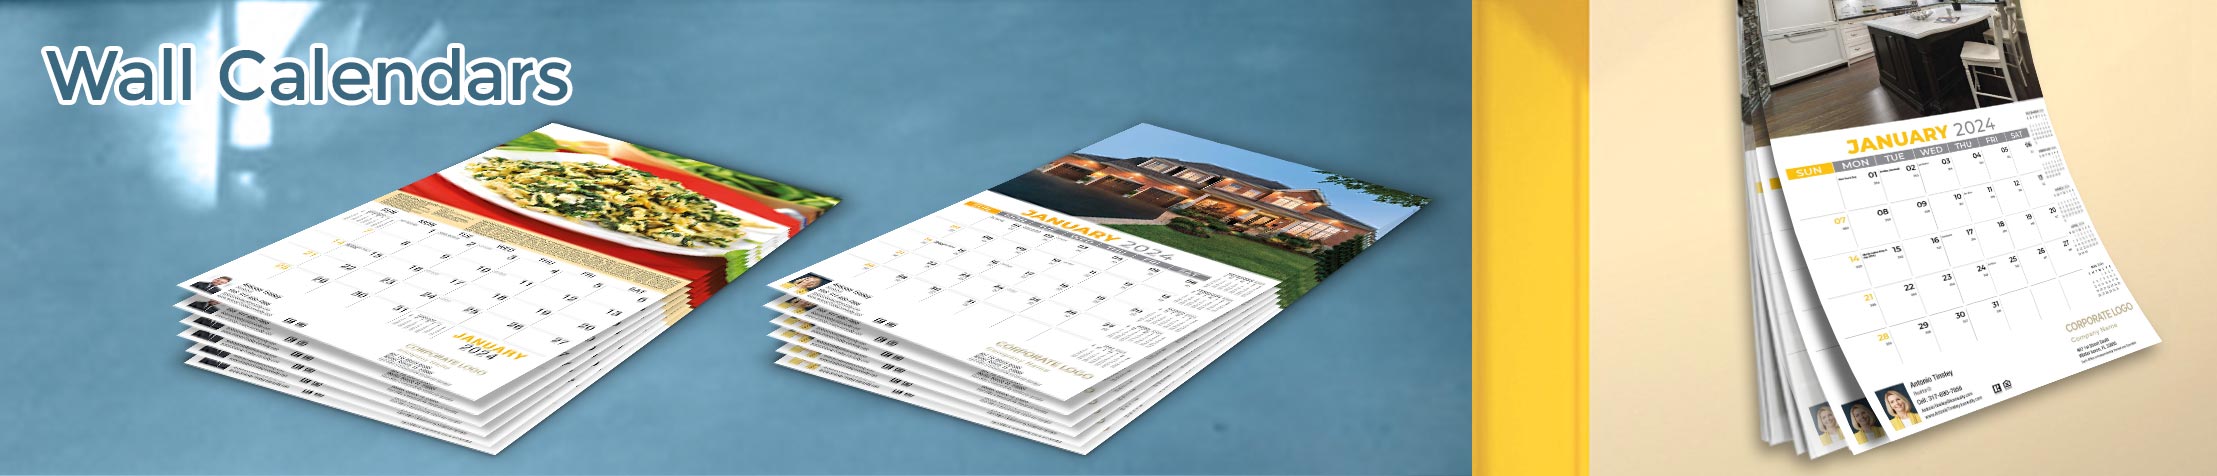 Century 21 Real Estate Wall Calendars - Century 21  2019 wall calendars | BestPrintBuy.com